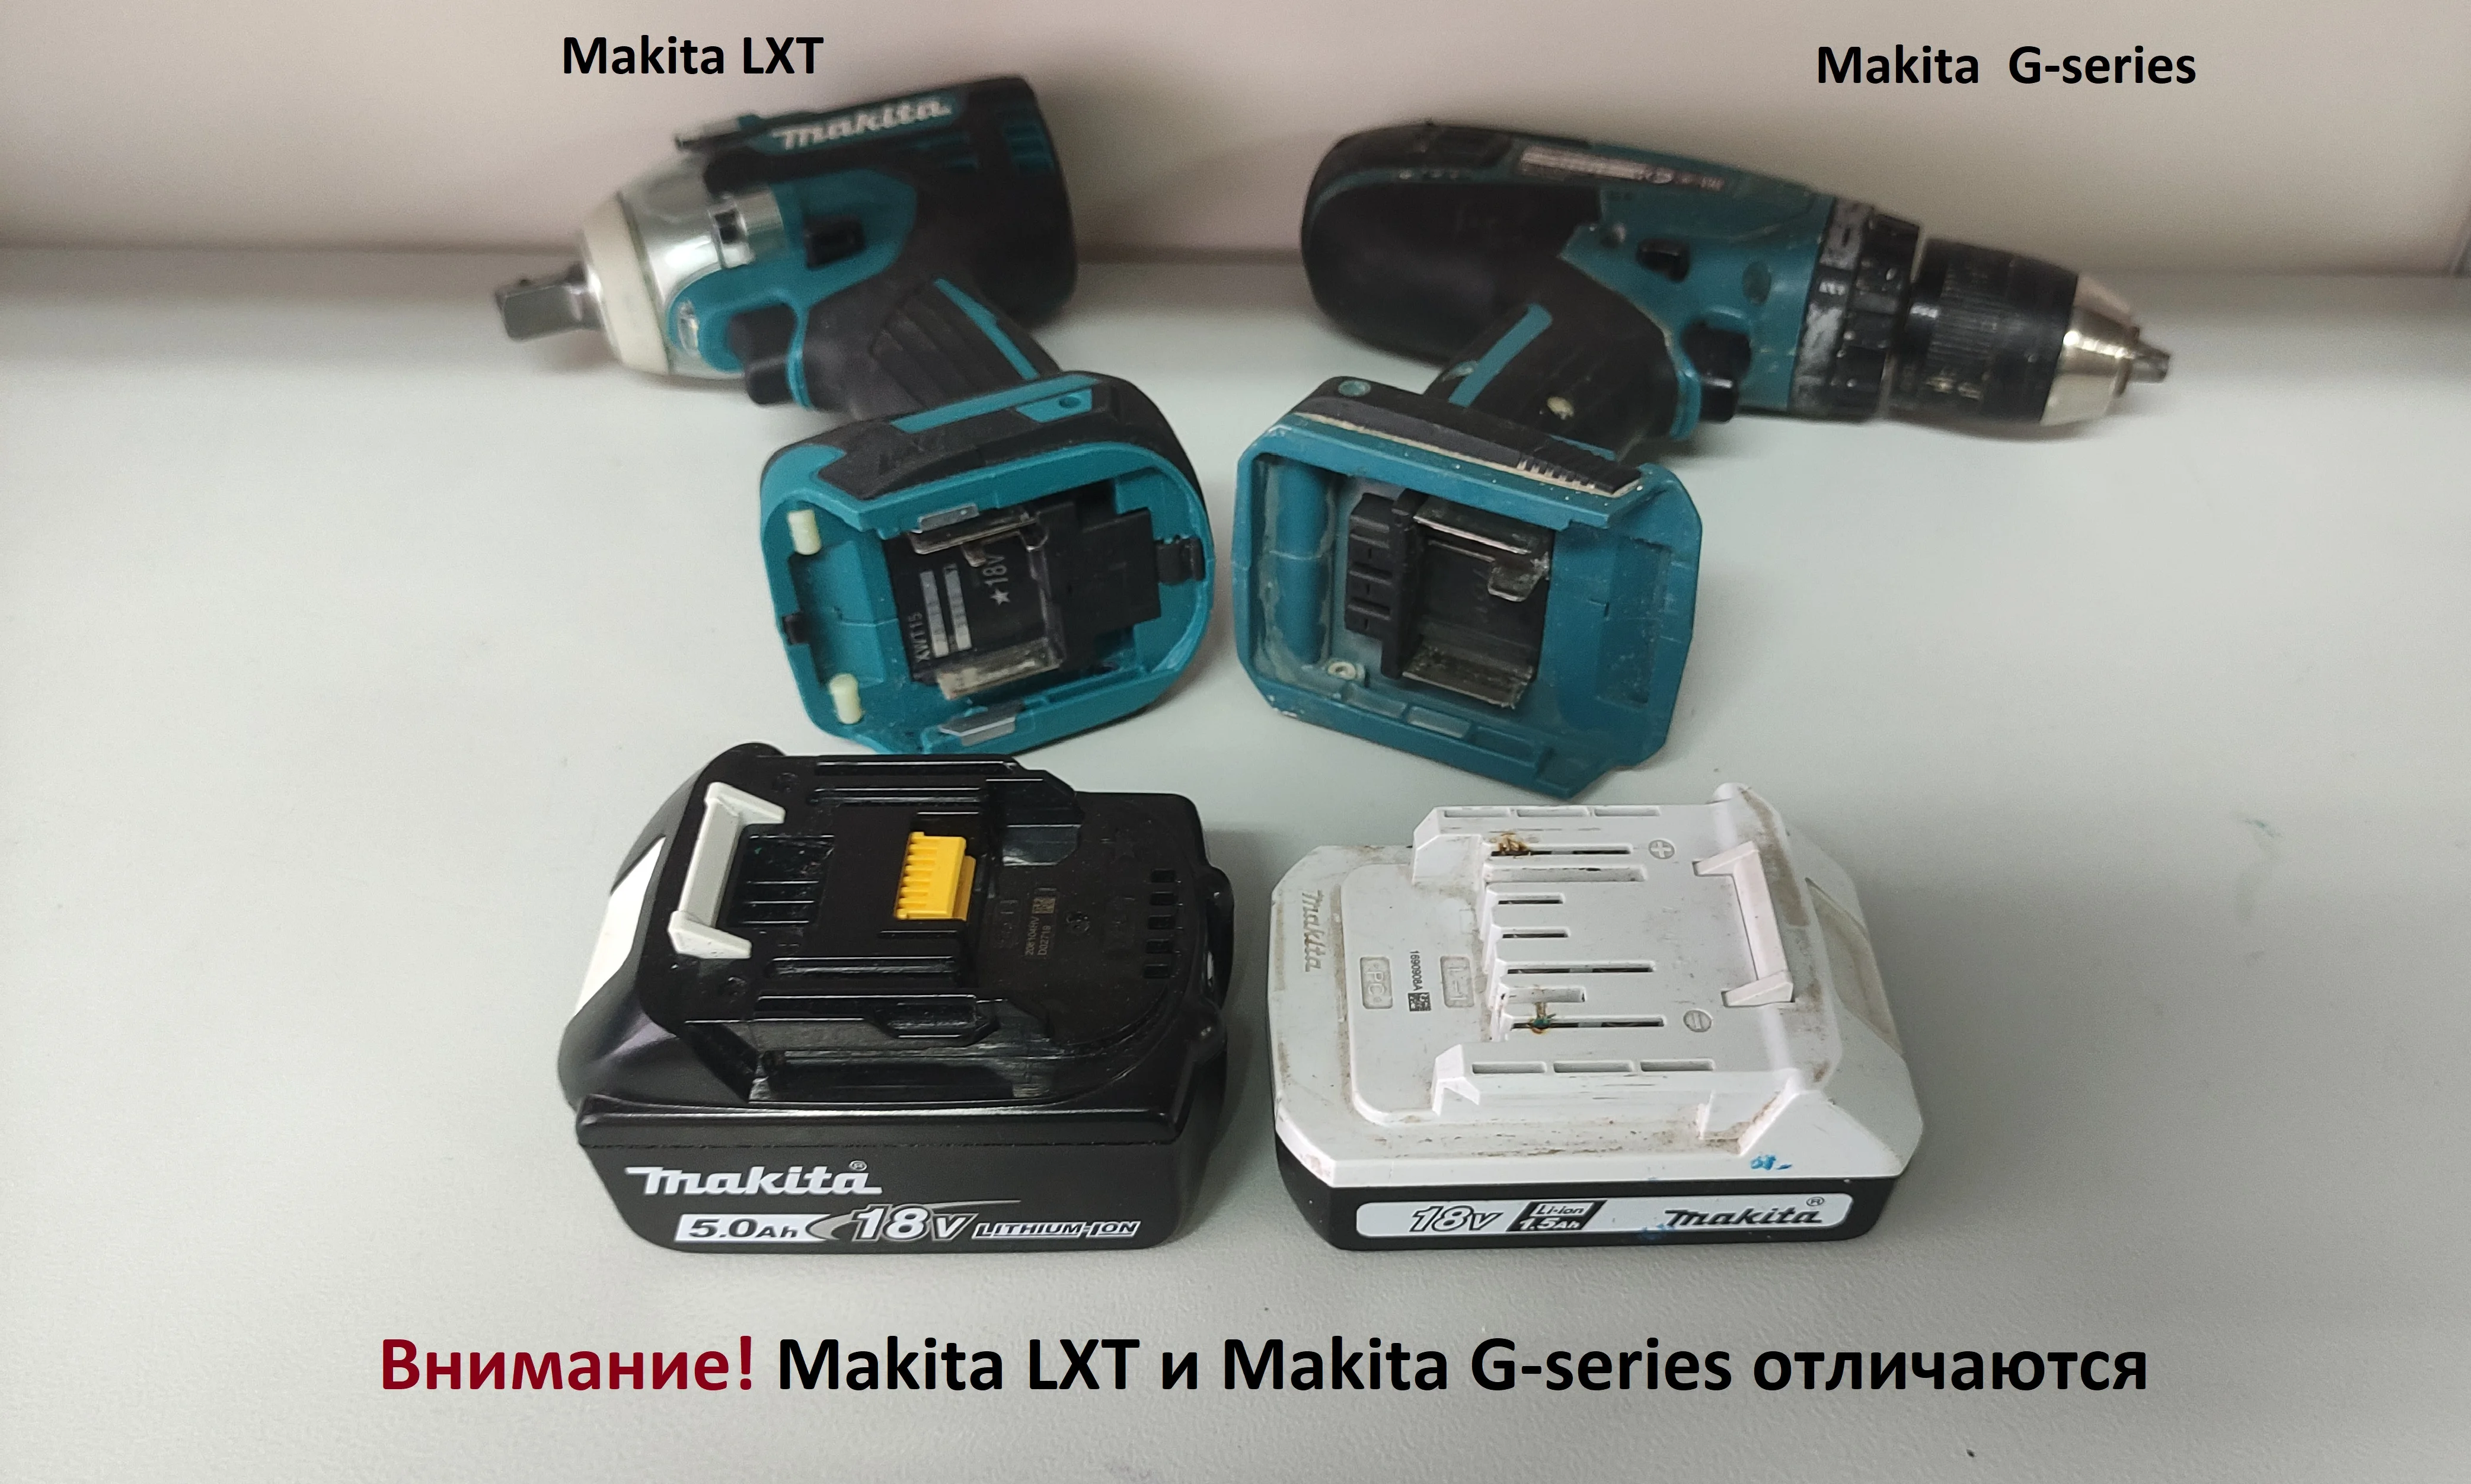 (adapter) for Makita LXT tool